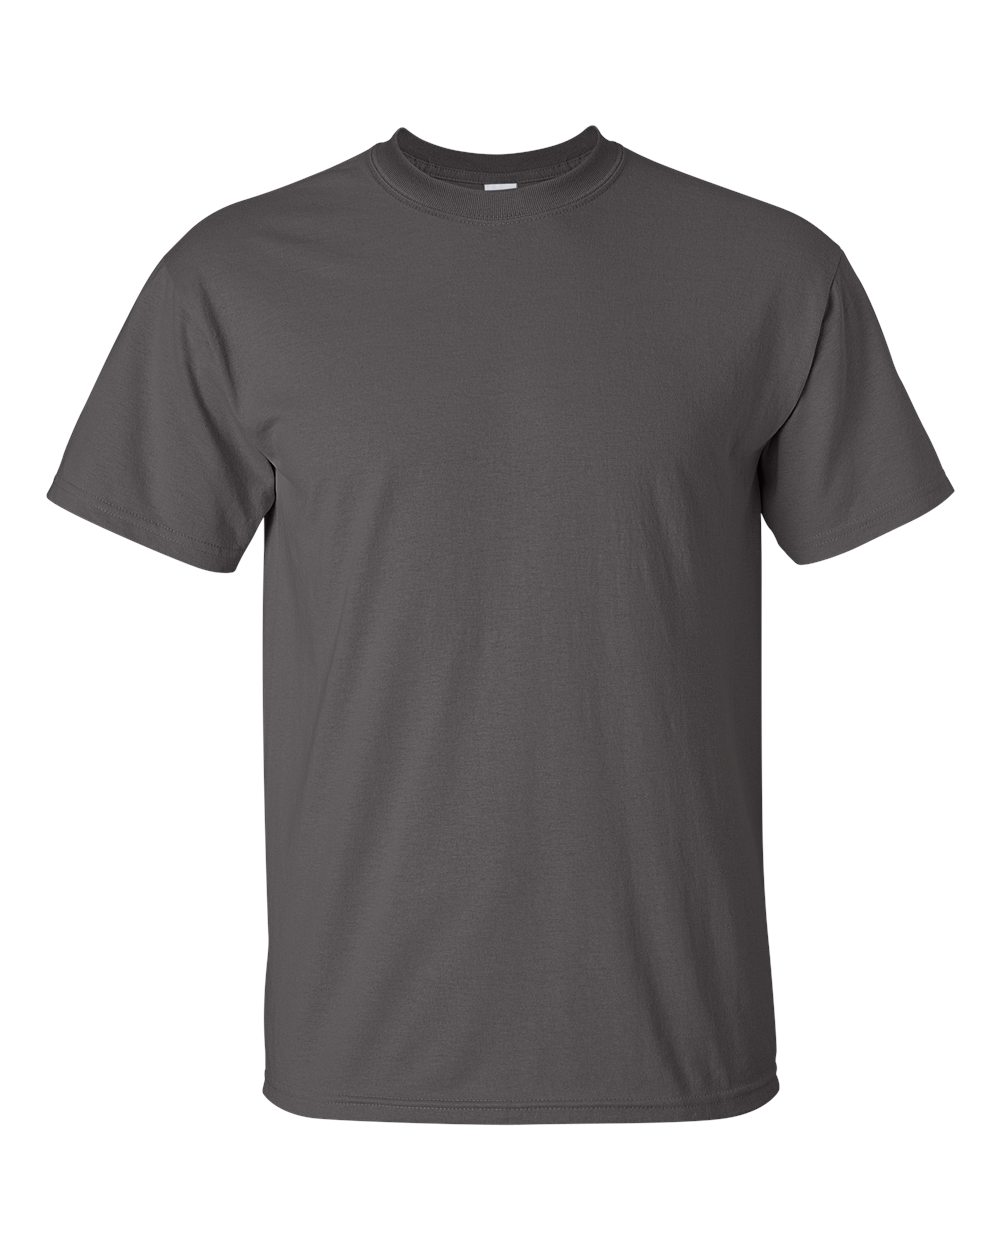 Dark Grey T Shirt Template